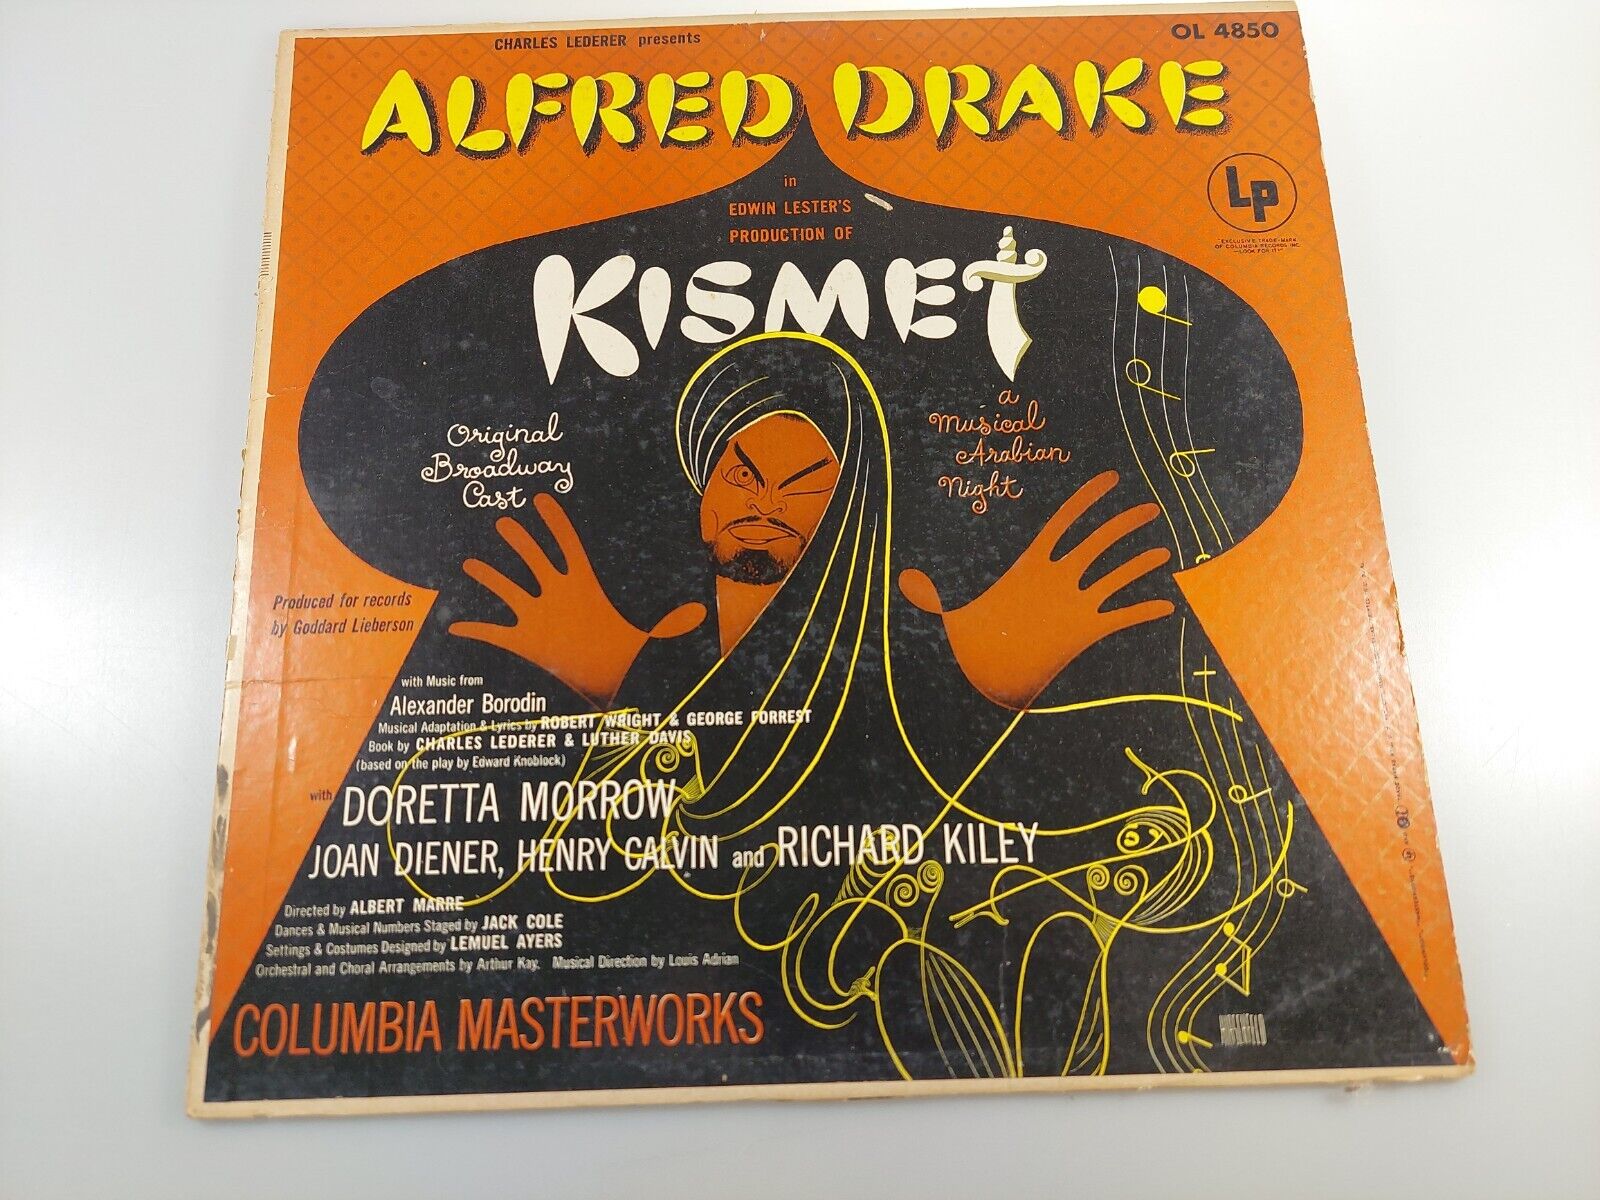 Alfred Drake Kismet Vinyl LP Broadway Musical Columbia  